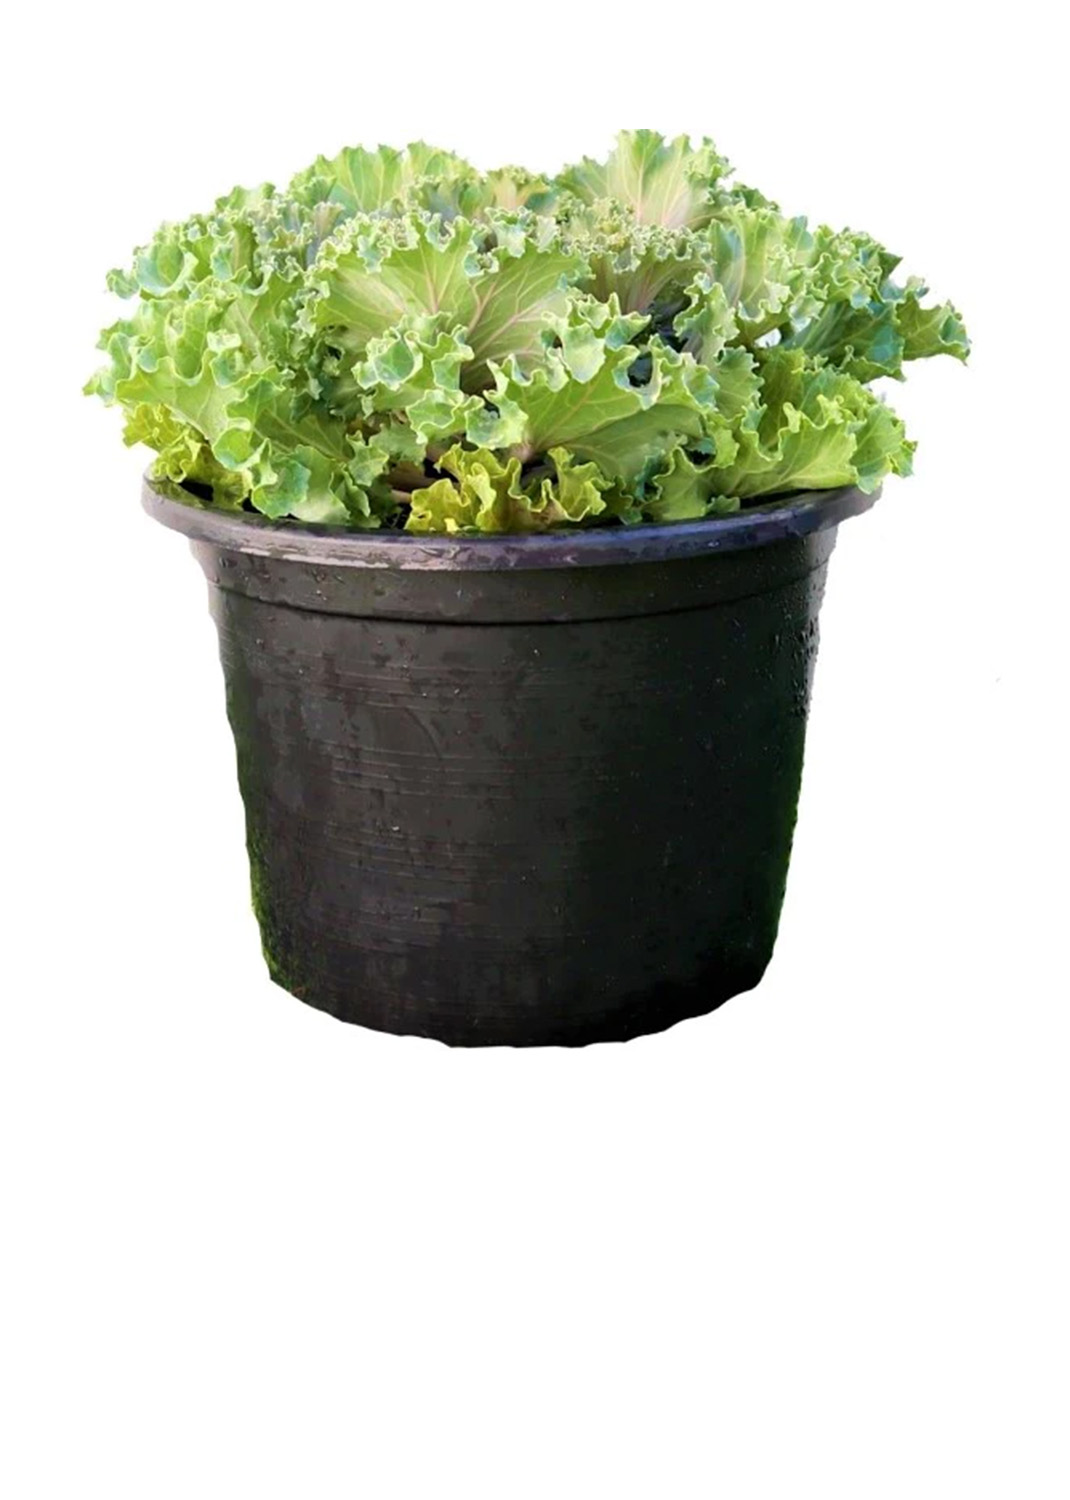 Ornamental Kale, Brassica Oleracea